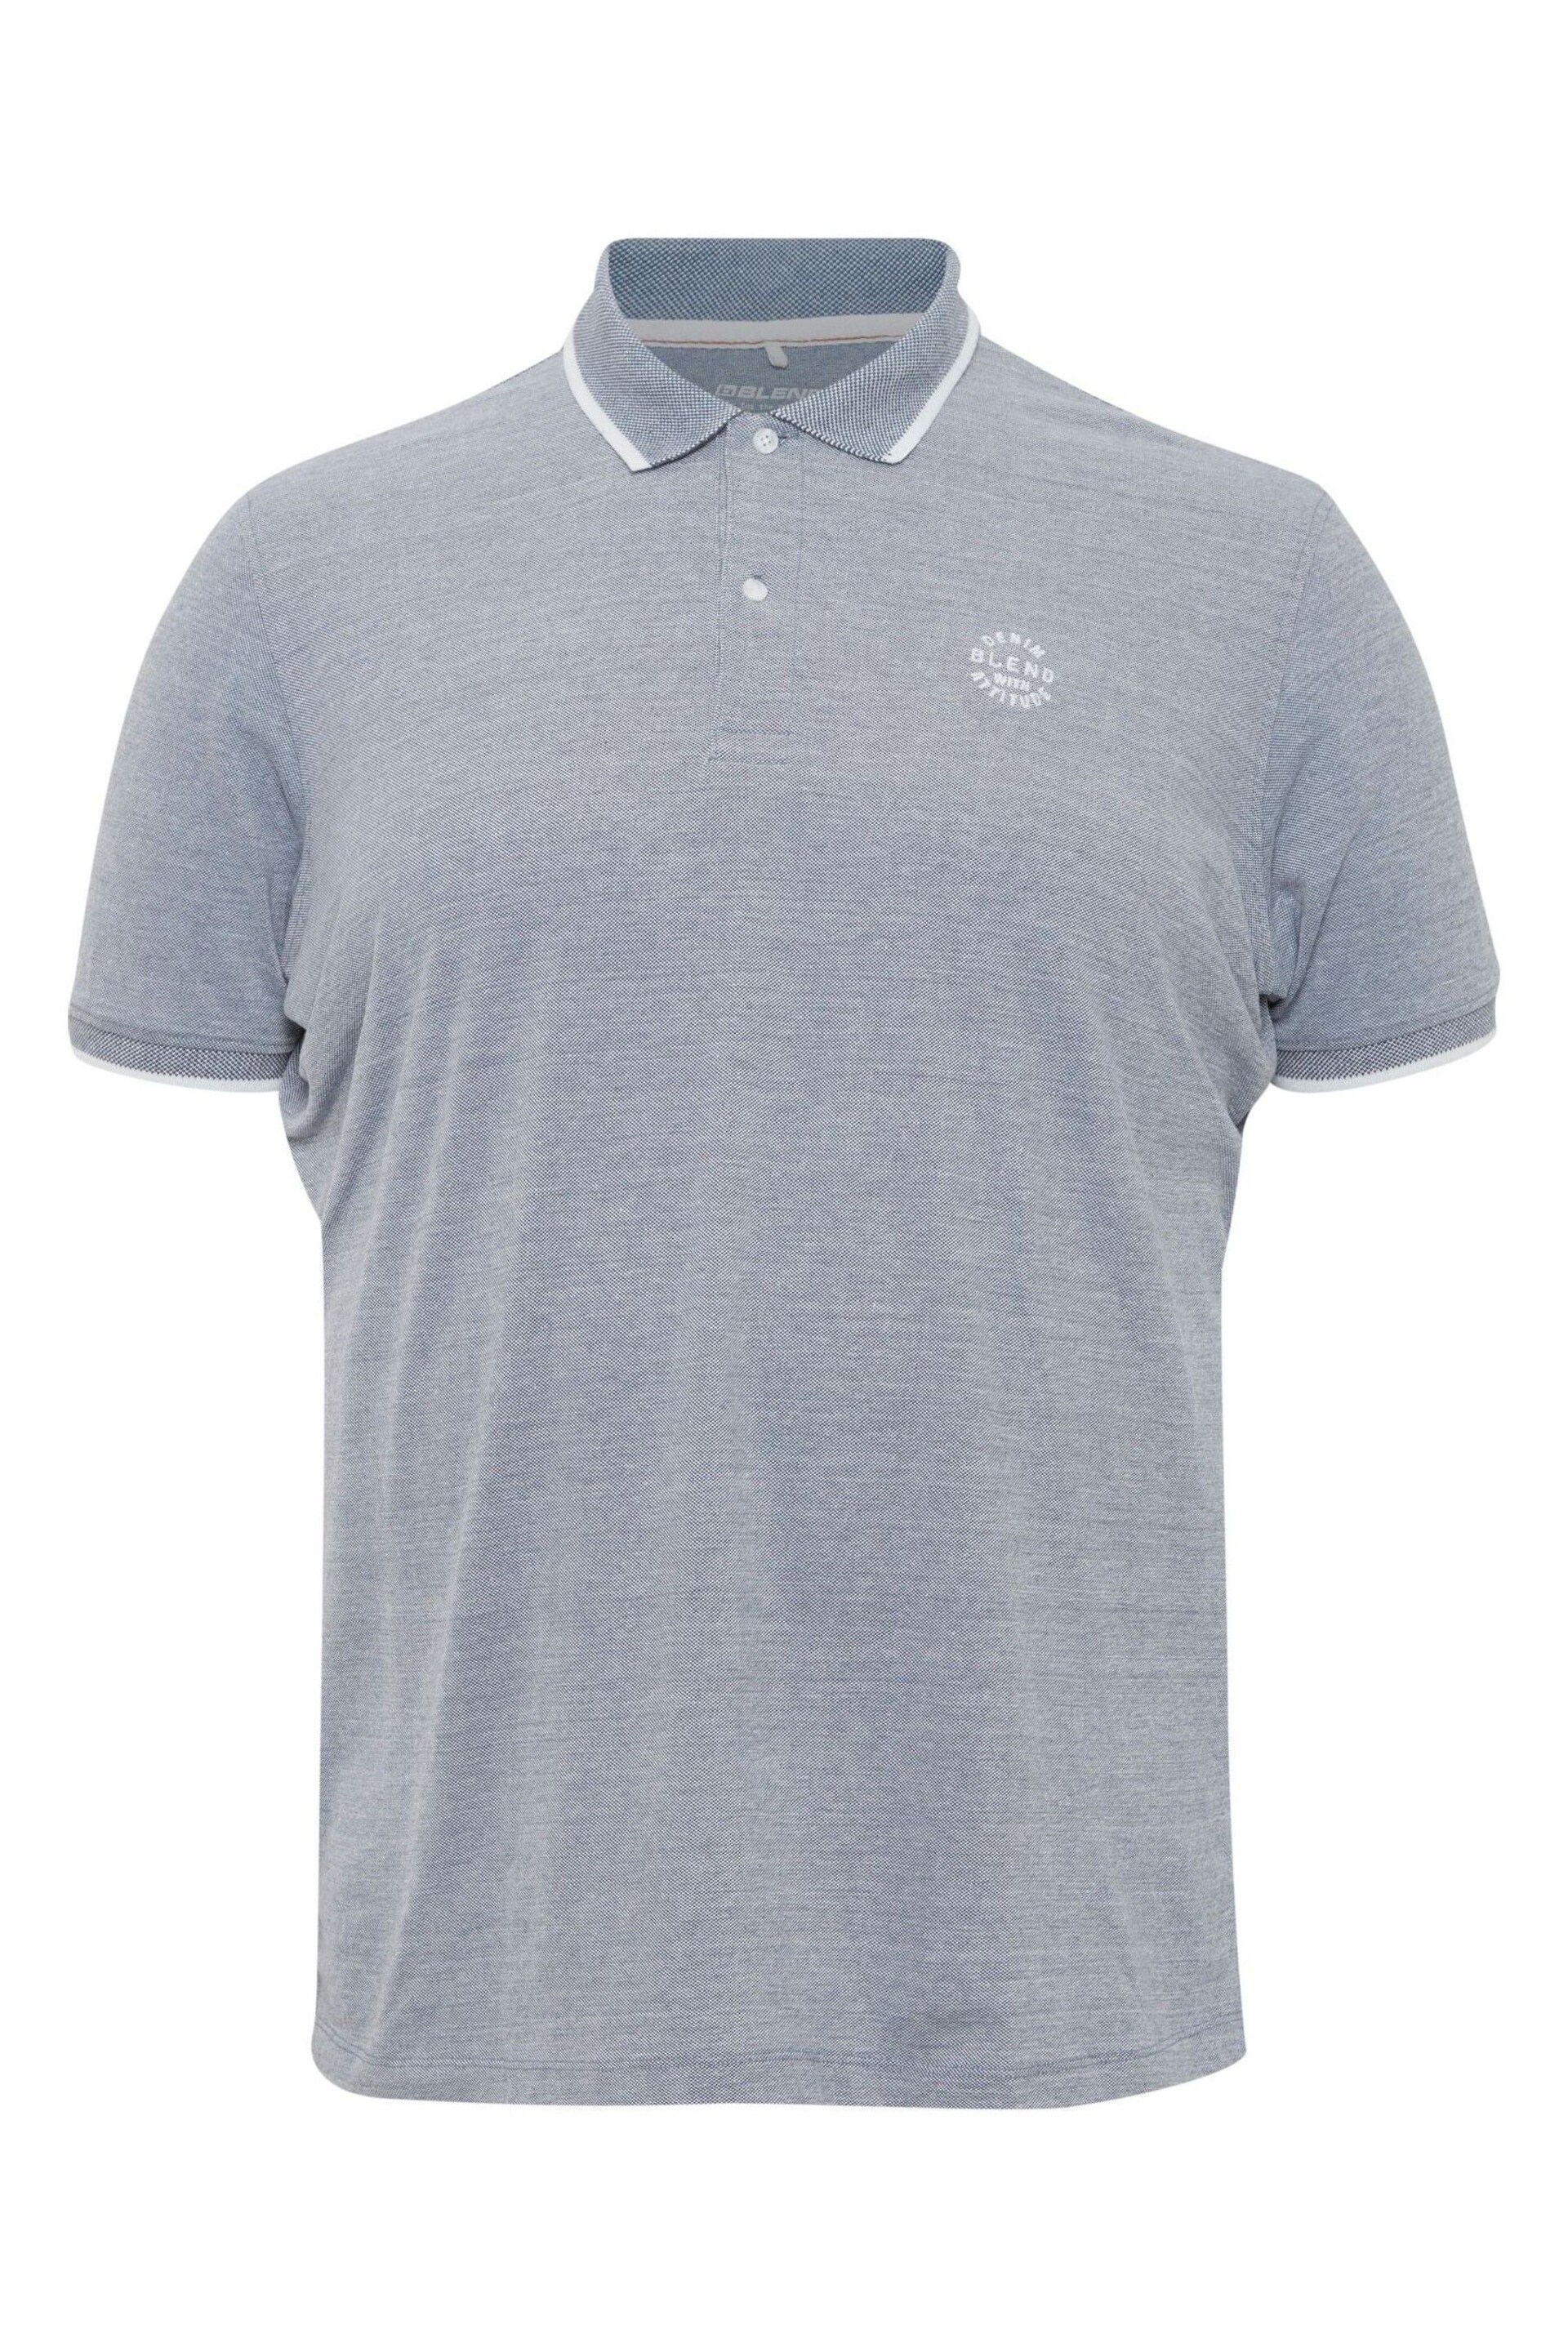 Blend Blue Pique Short Sleeve Polo Shirt - Image 5 of 5